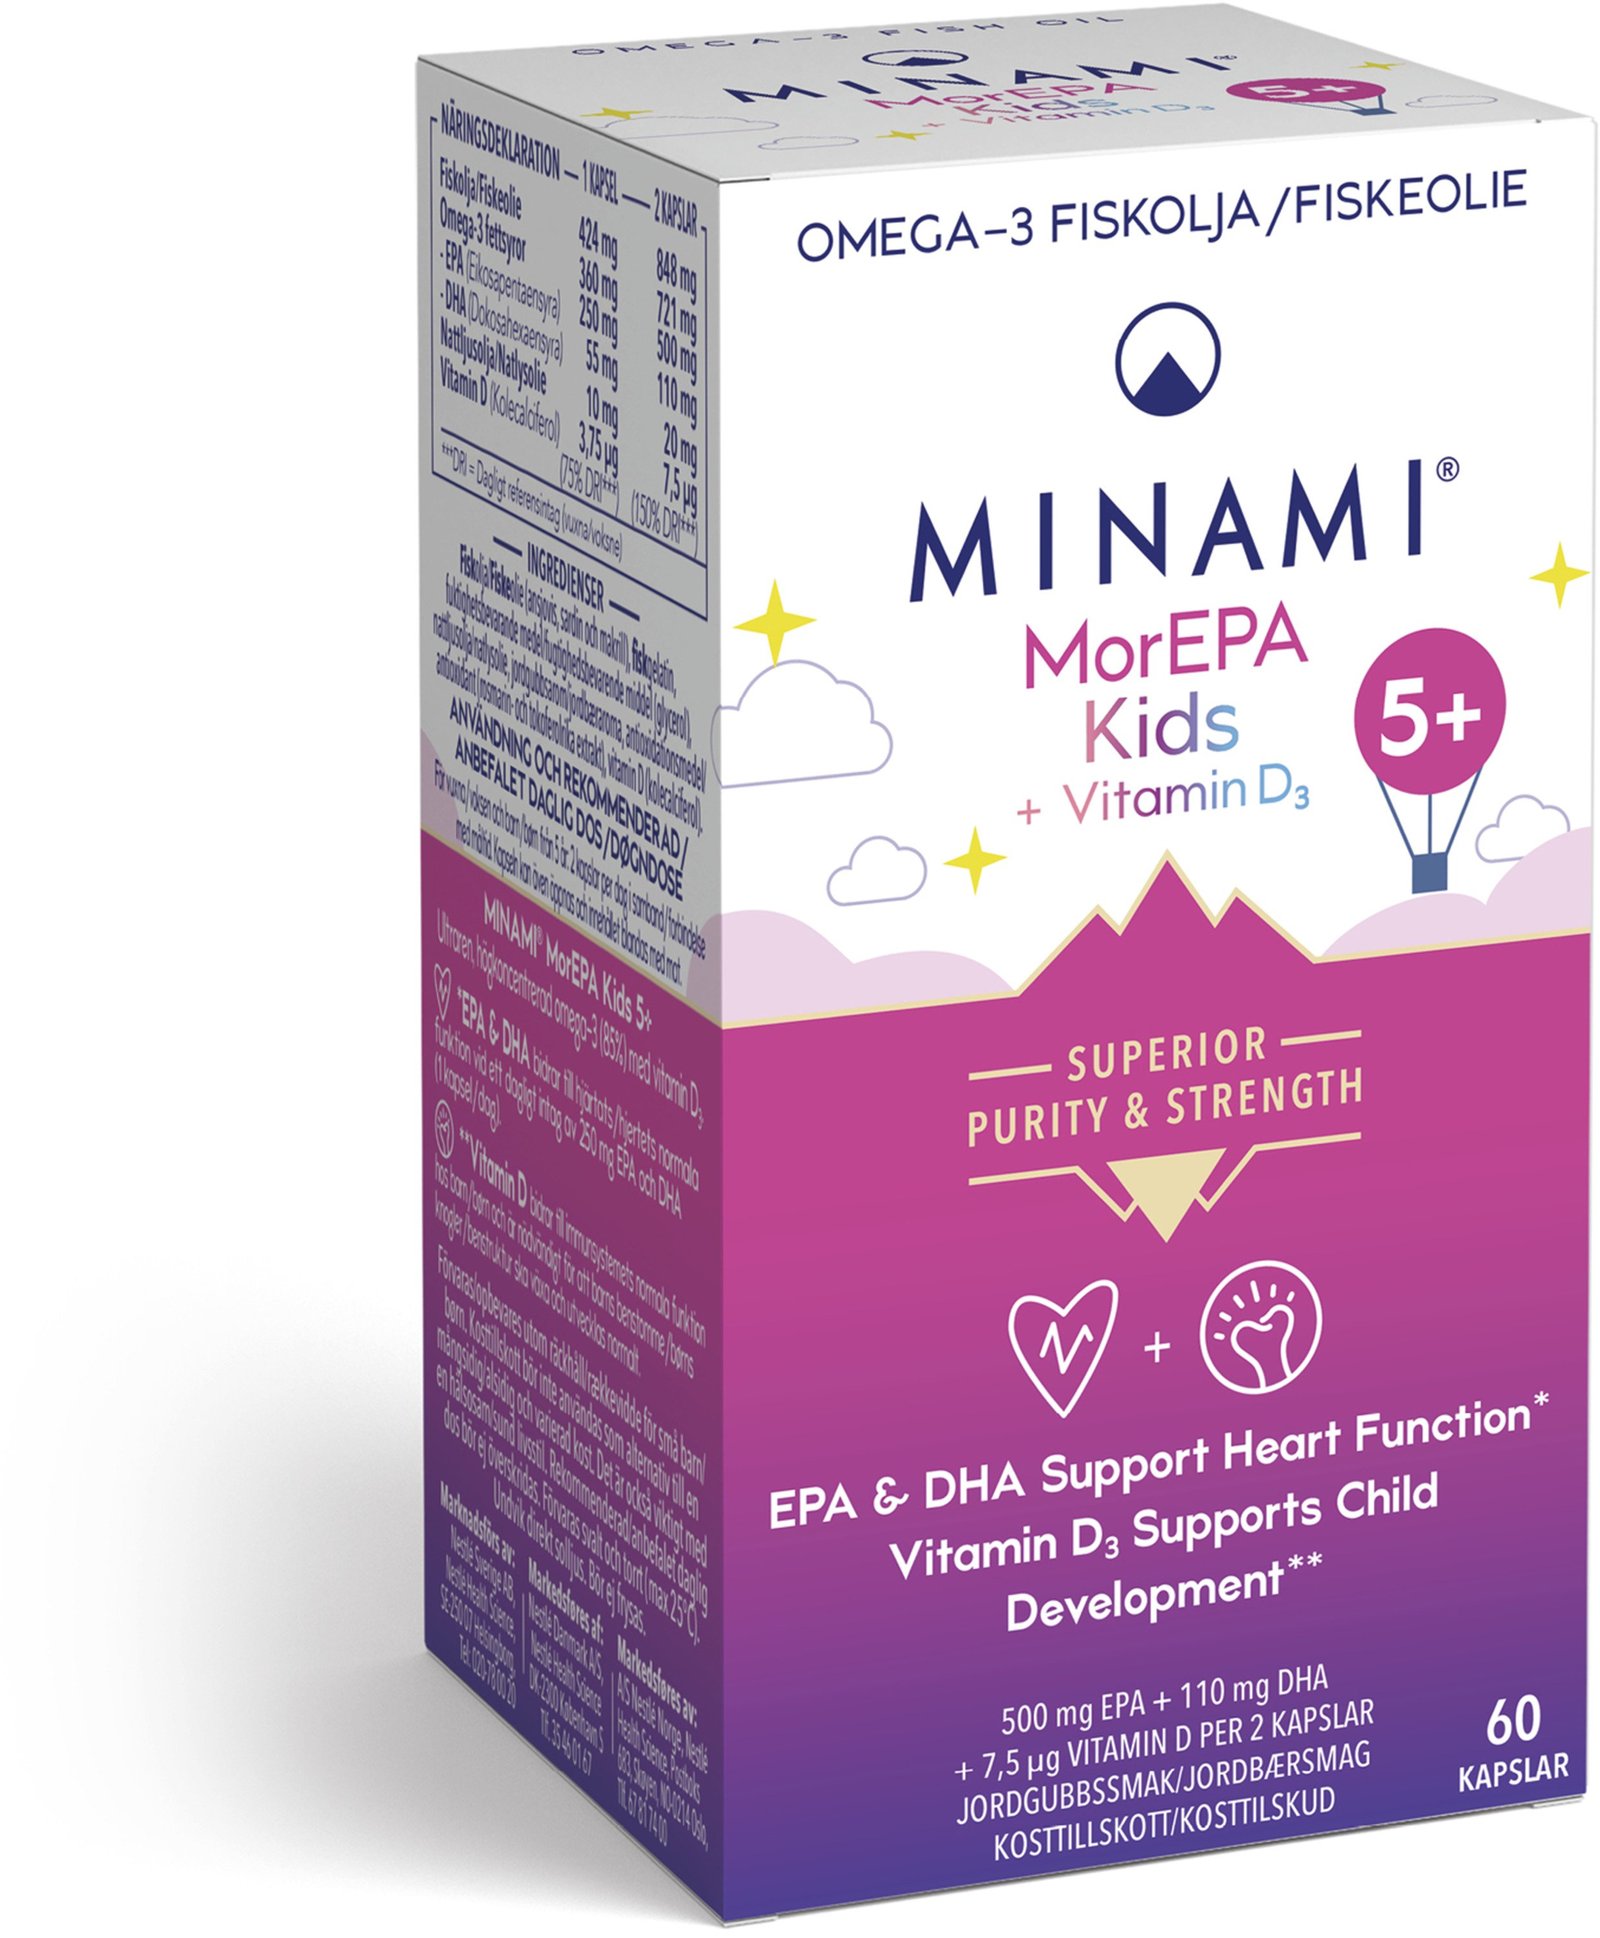 MINAMI MorEPA Kids Omega-3 & Vitamin D3 60 kapslar